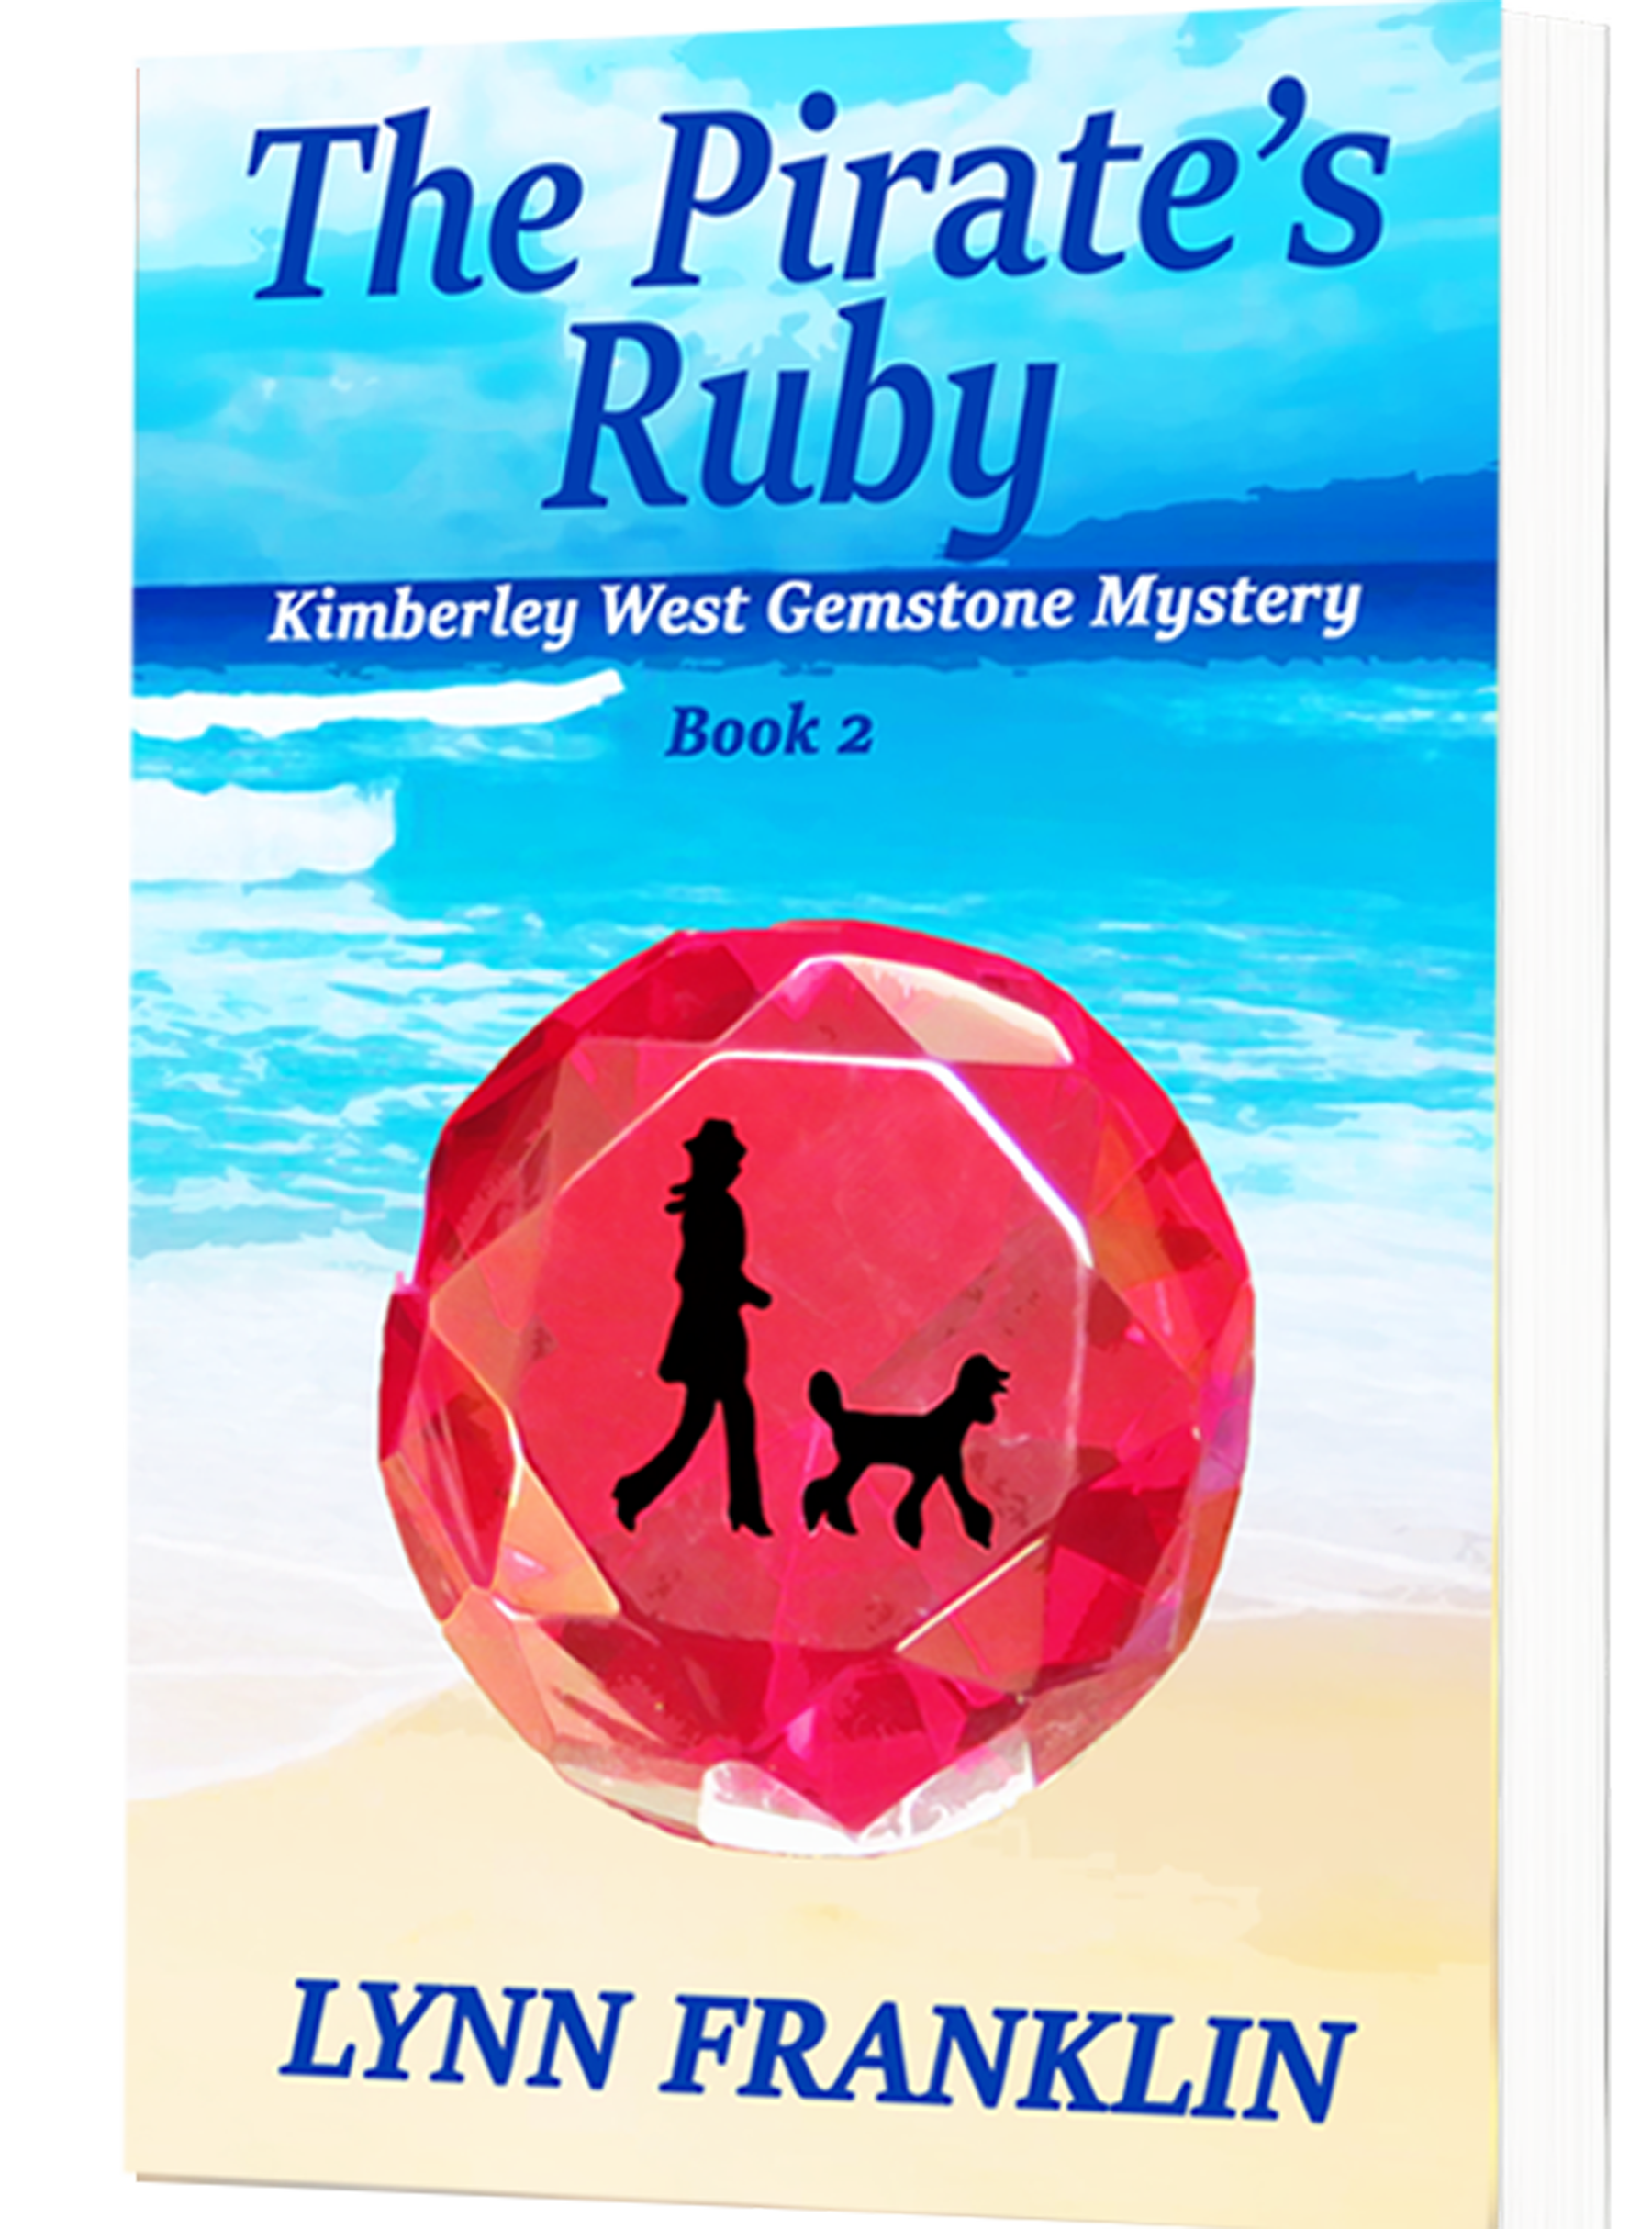 The Pirate's Ruby: Kimberley West Gemstone Mystery #2